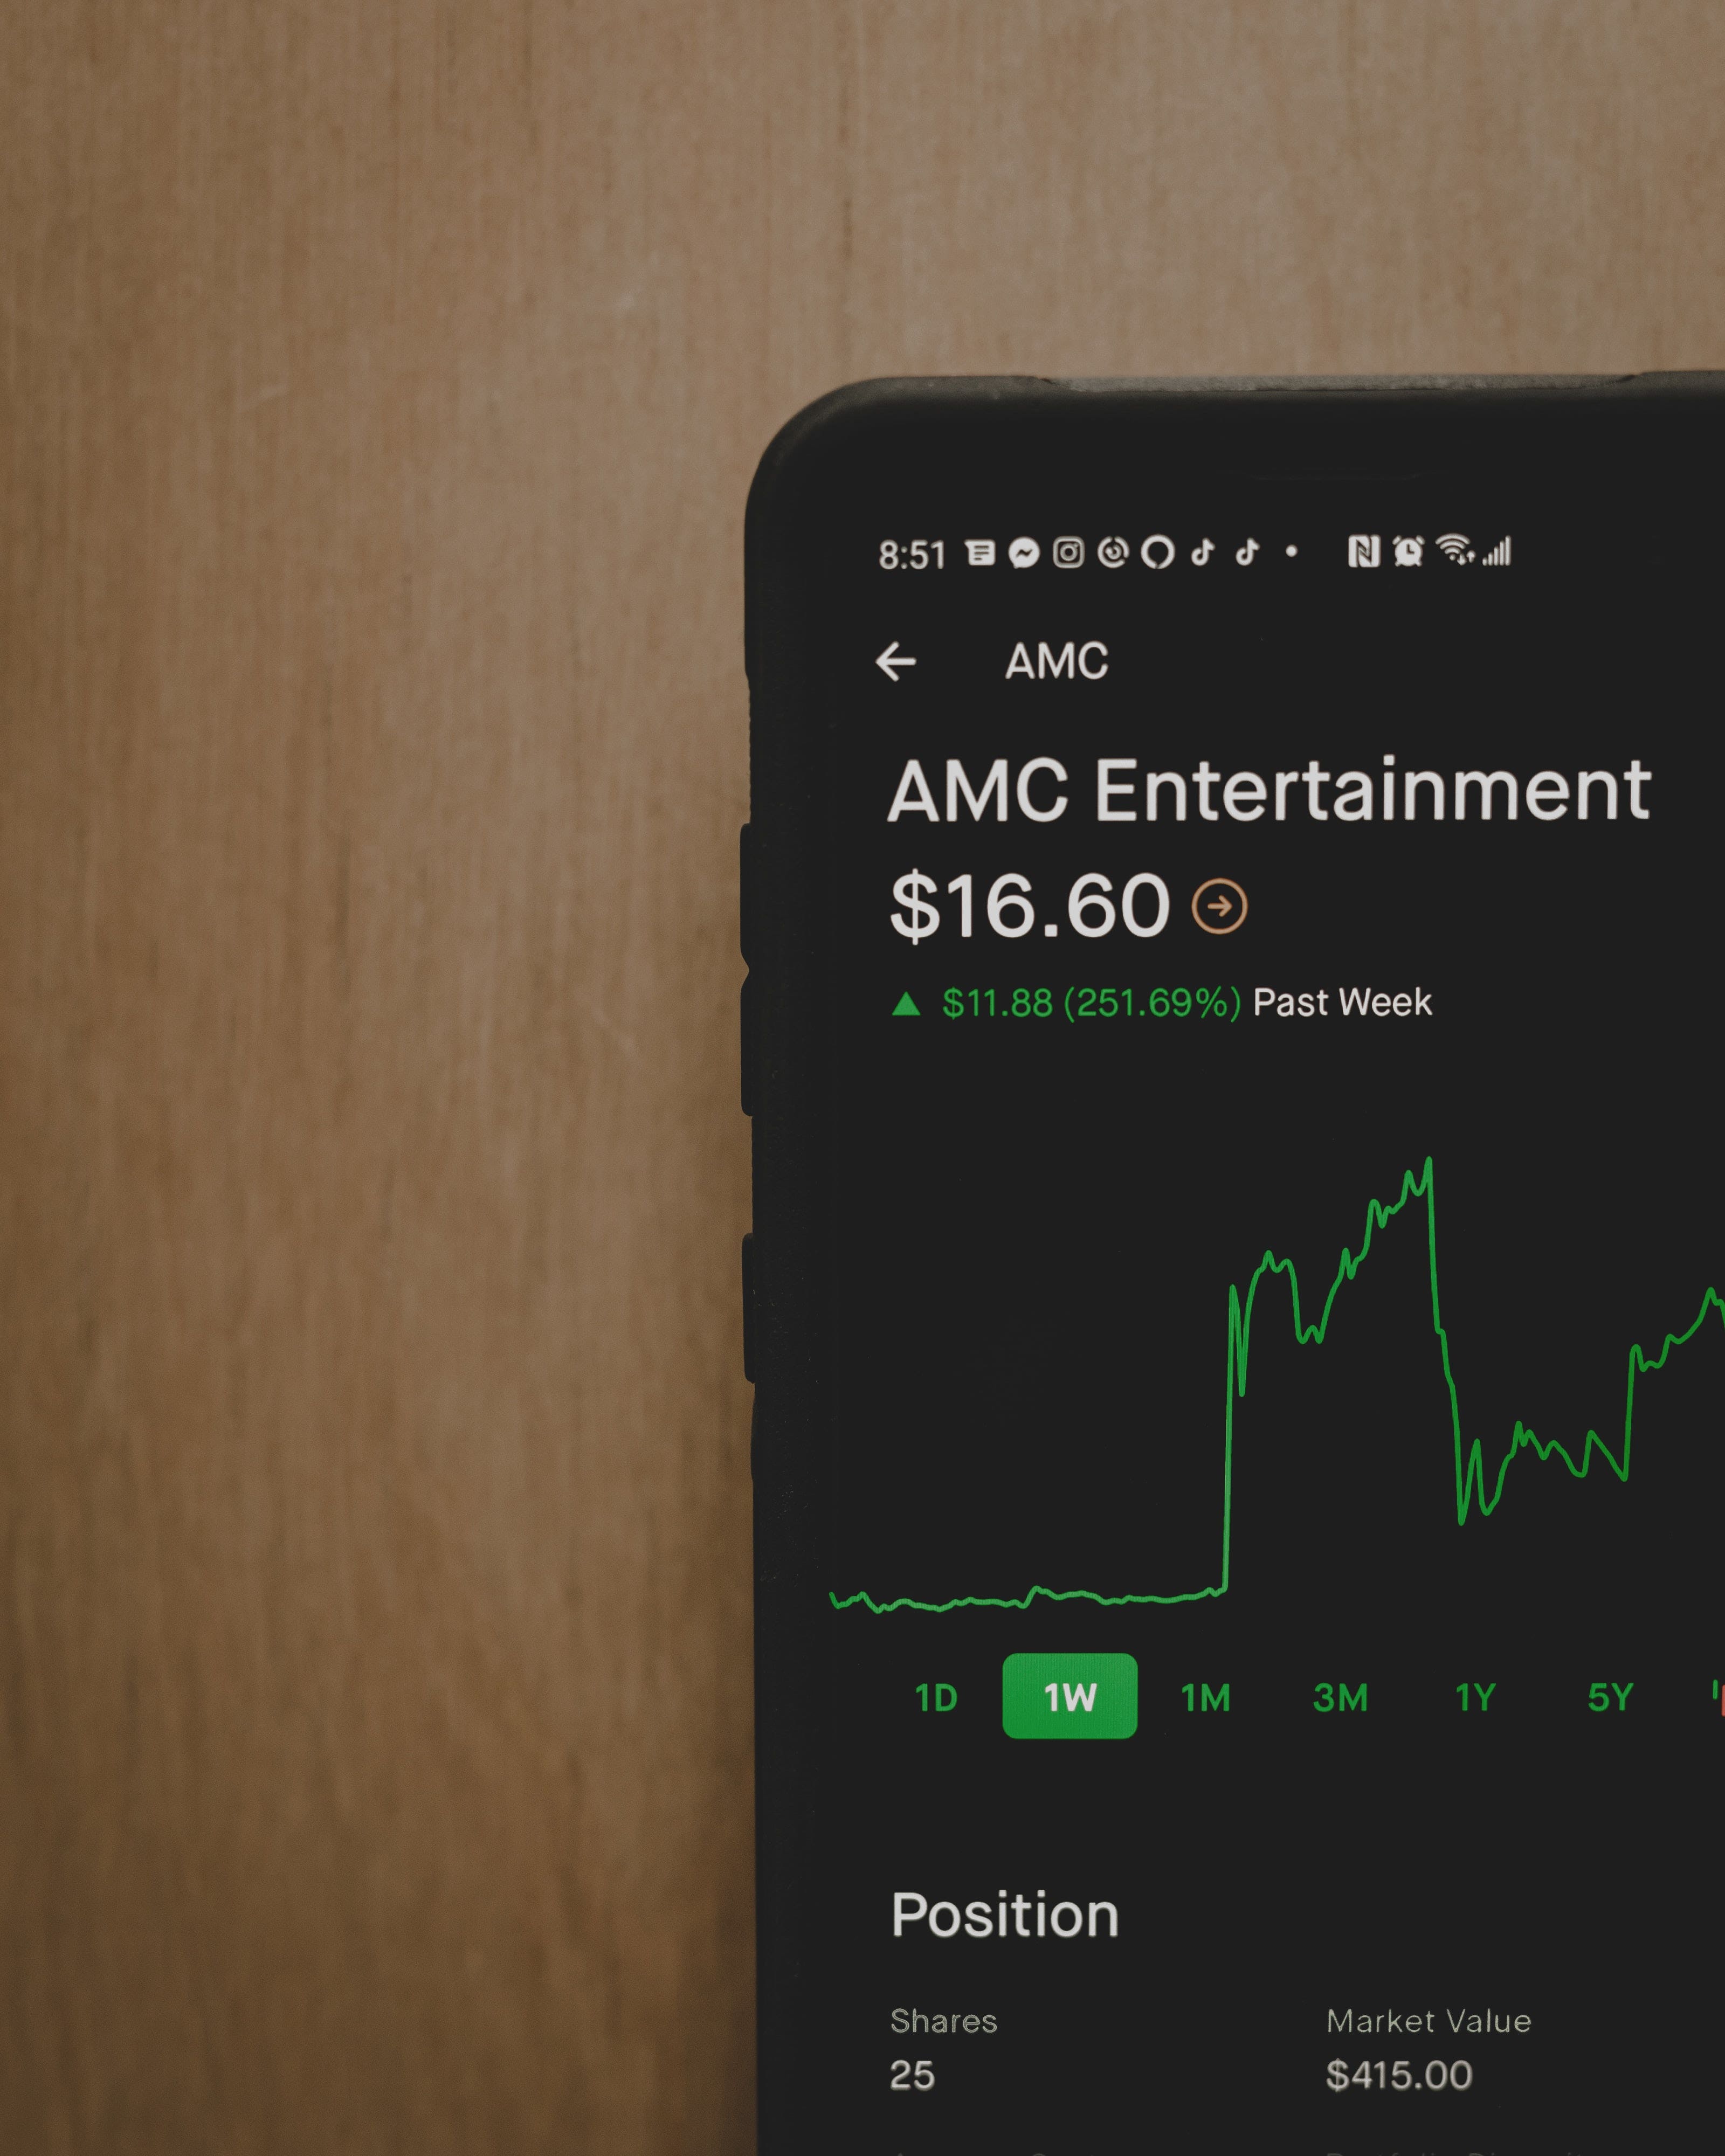 You Ask, We Analyze: AMC Entertainment Stock Looks Strong Like King Kong